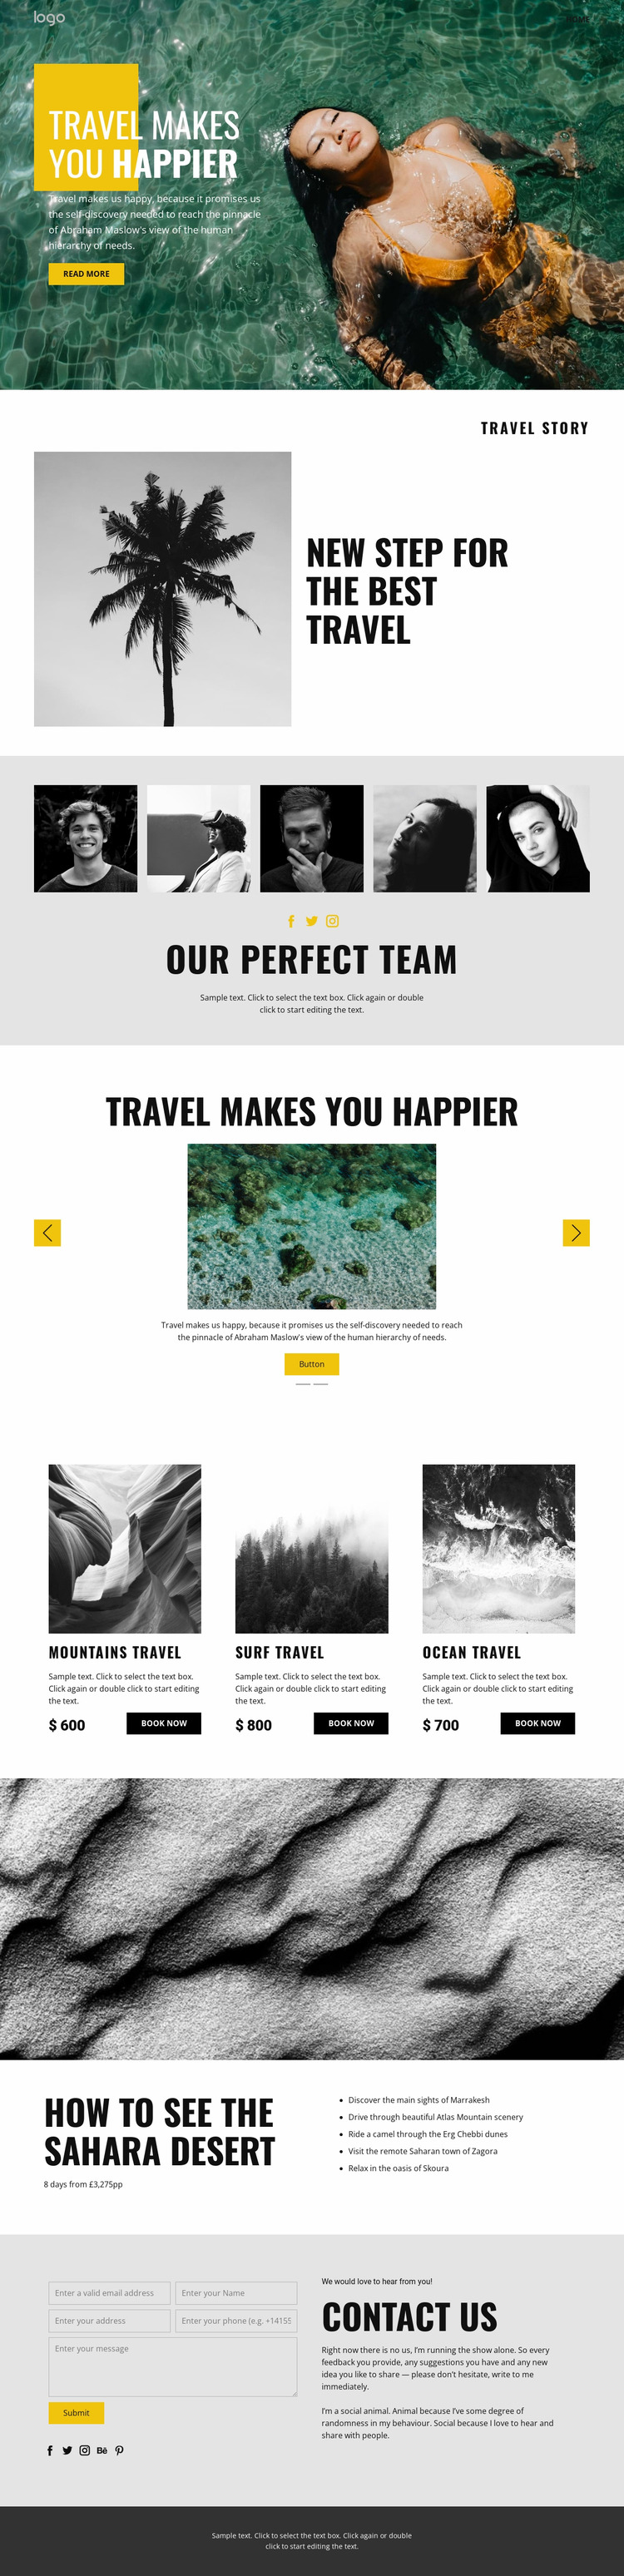 Happy people deserve travel Html Website Builder